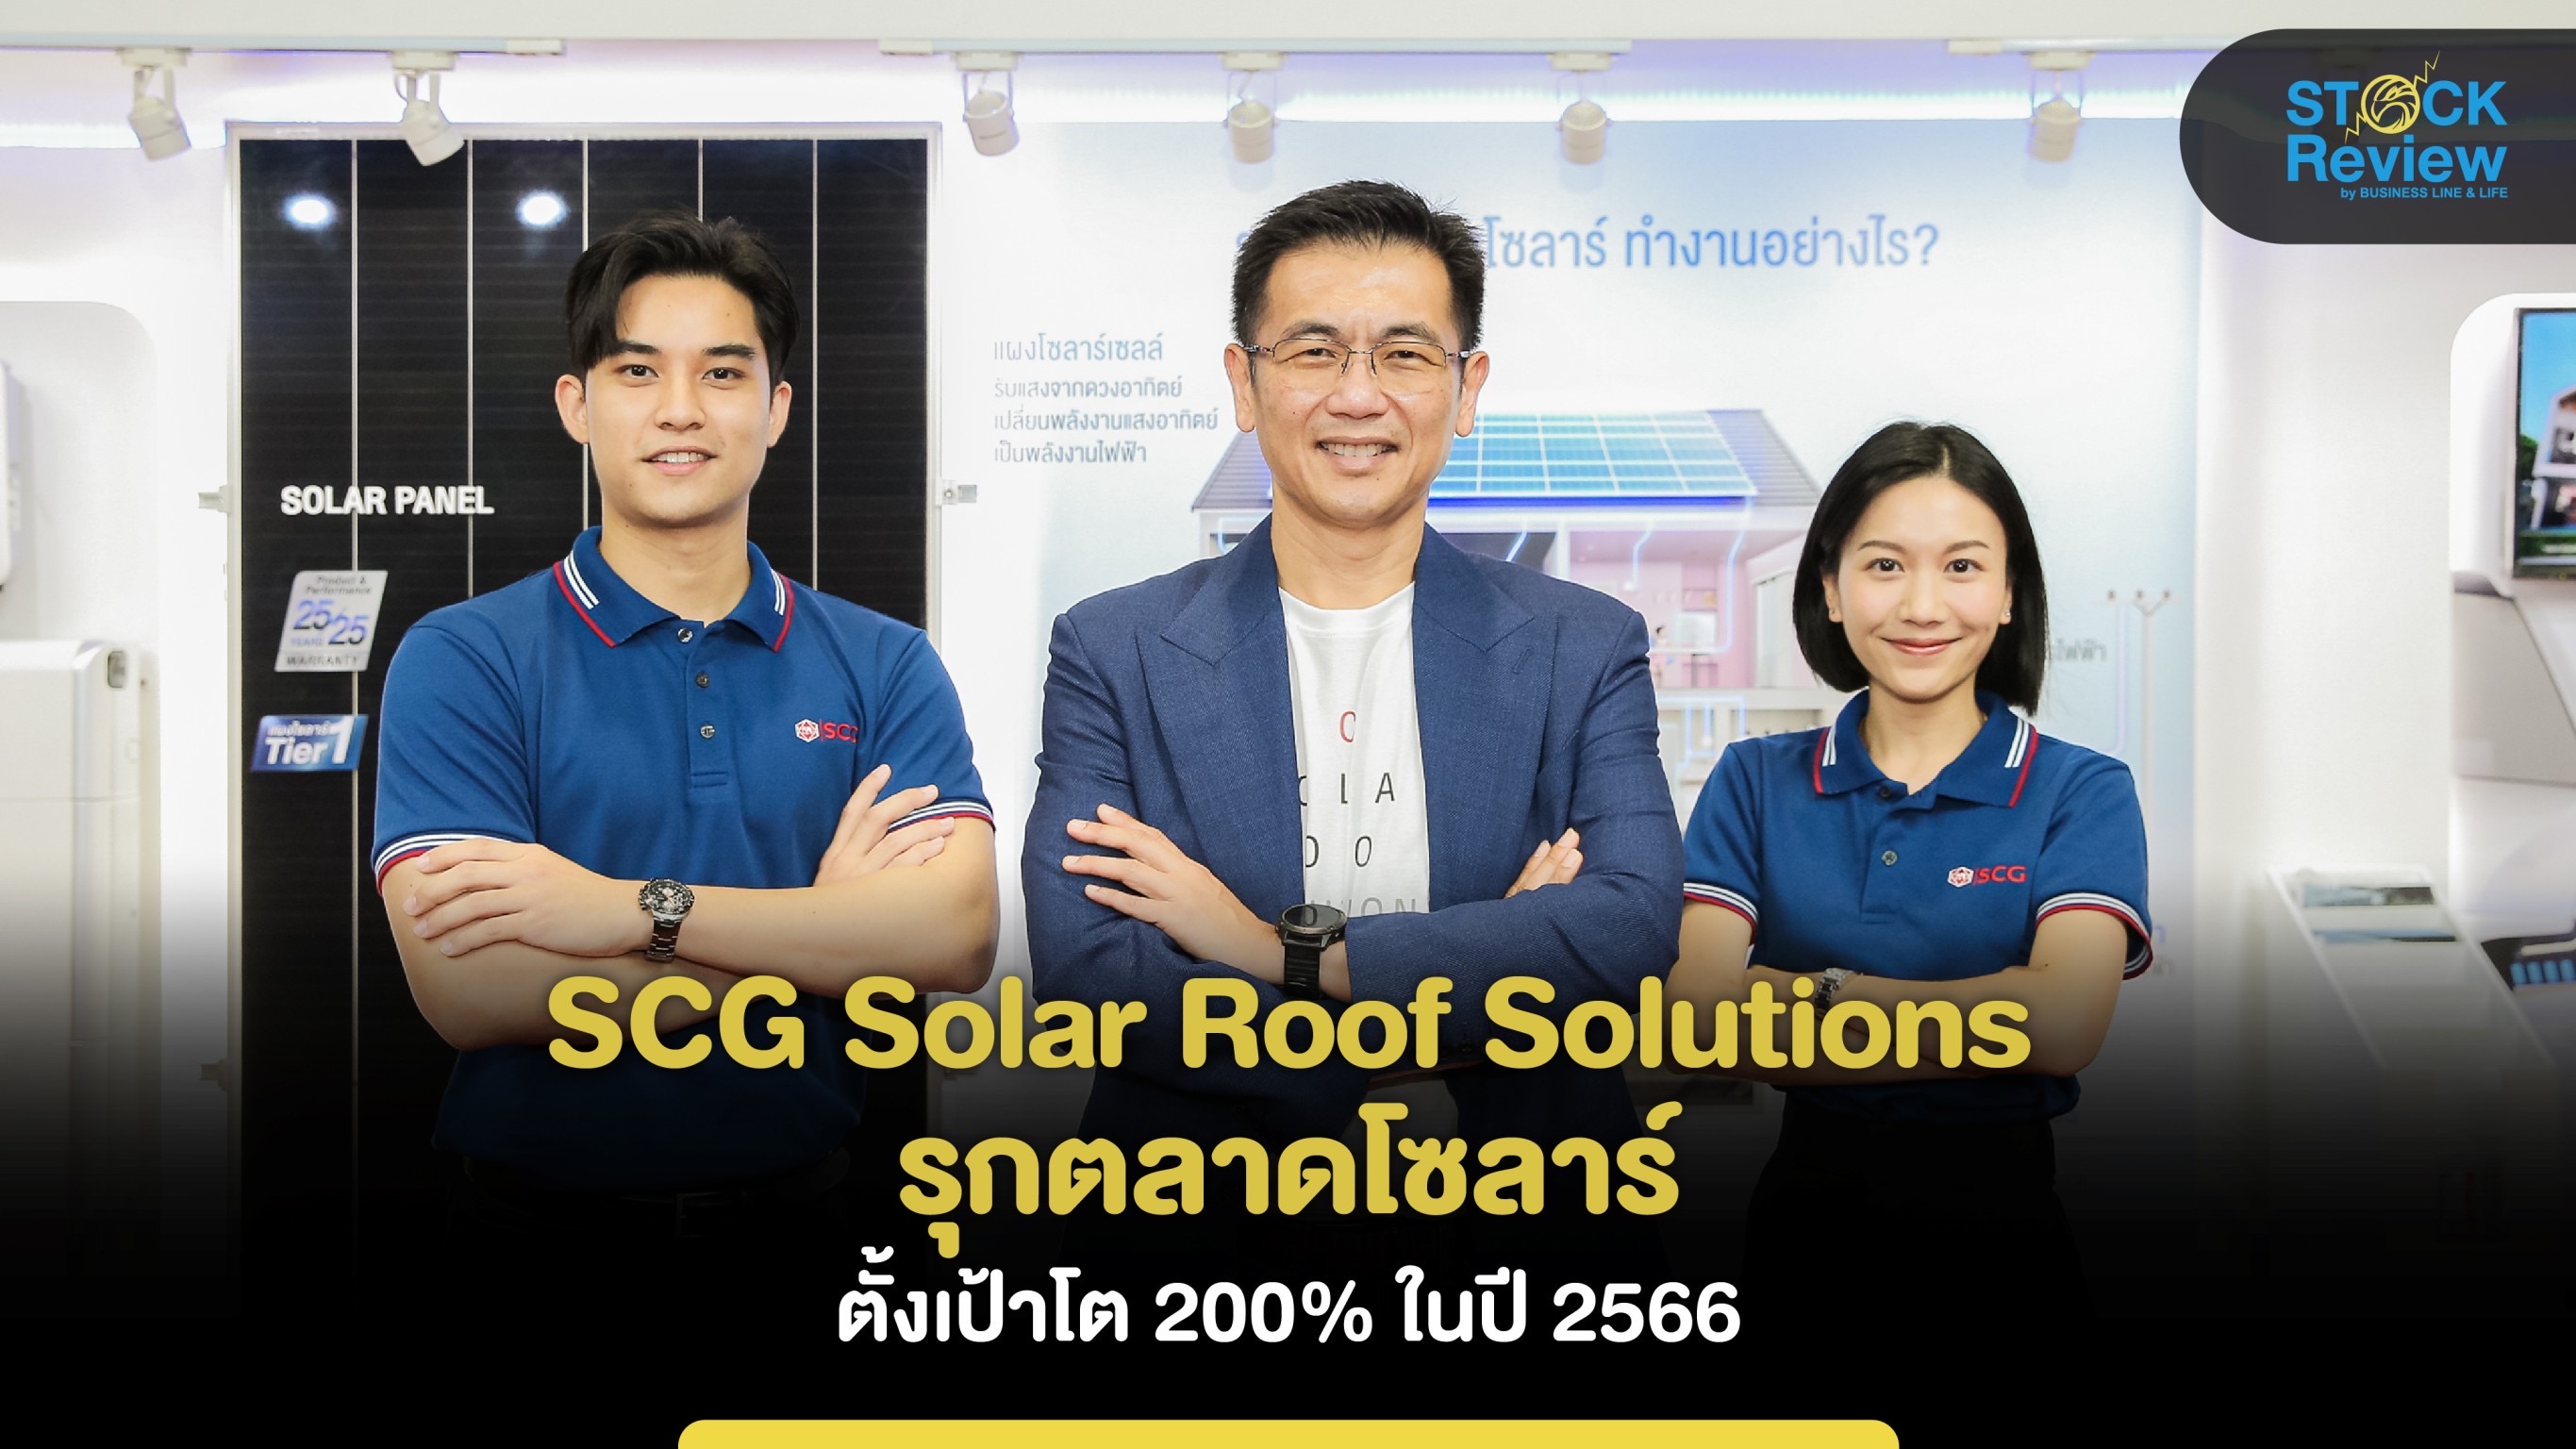 SCG Solar Roof Solutions รุกตลาดโซลาร์ ตั้งเป้าโต 200%